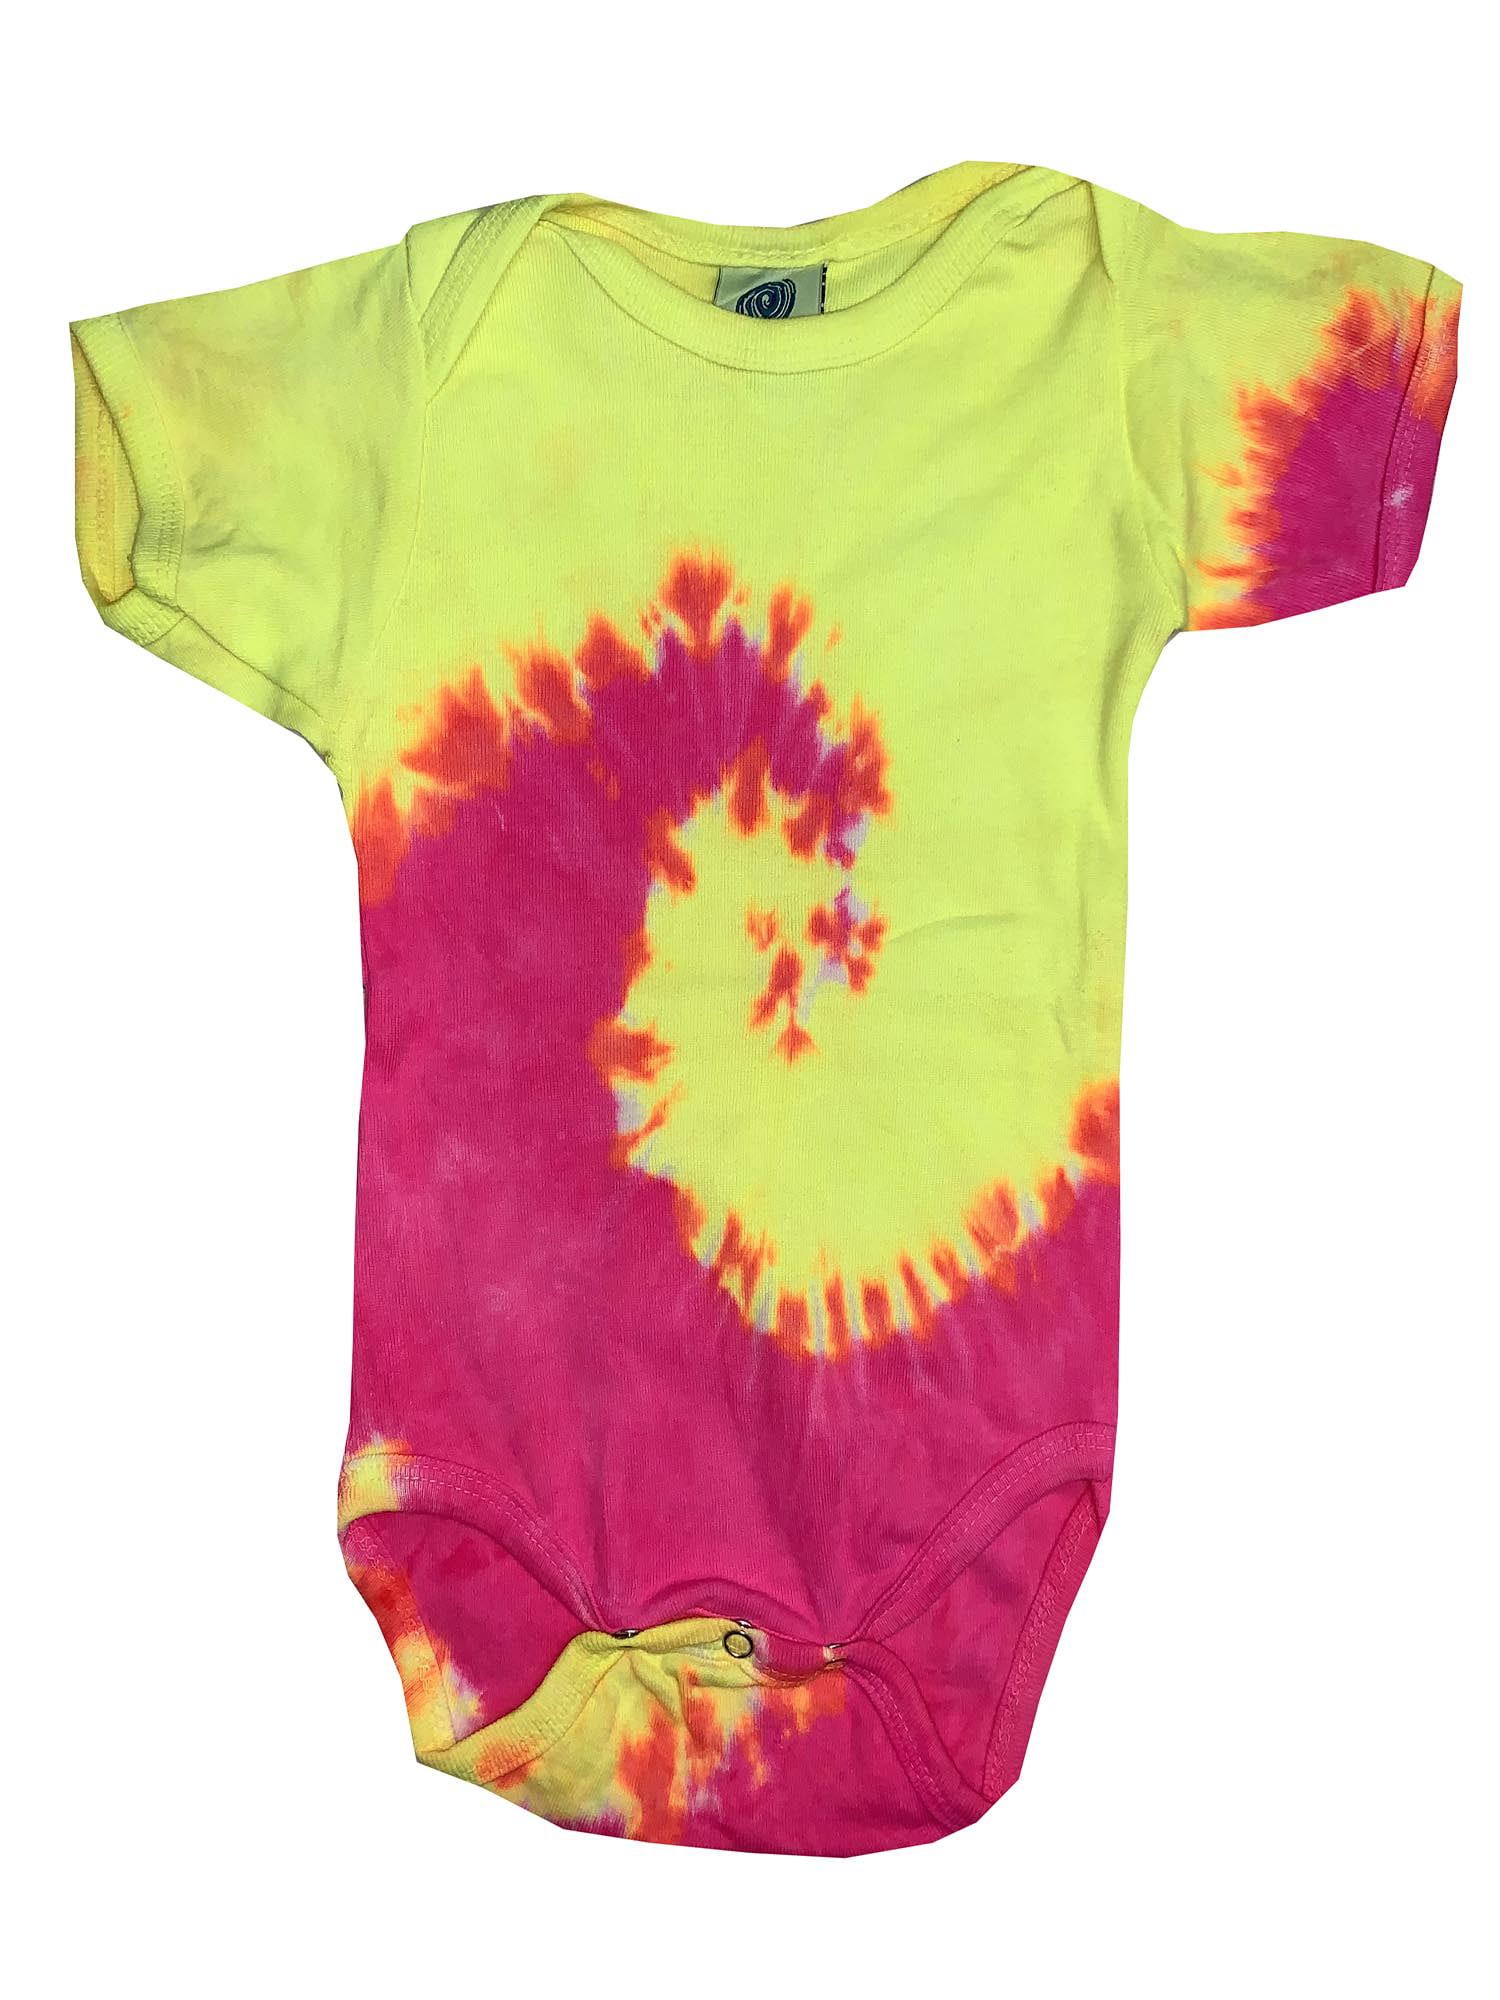 Tie Dye Baby Onesie Baby Girl Boy Bodysuit Clothing Clothes Shower Gift Galaxy Swirl